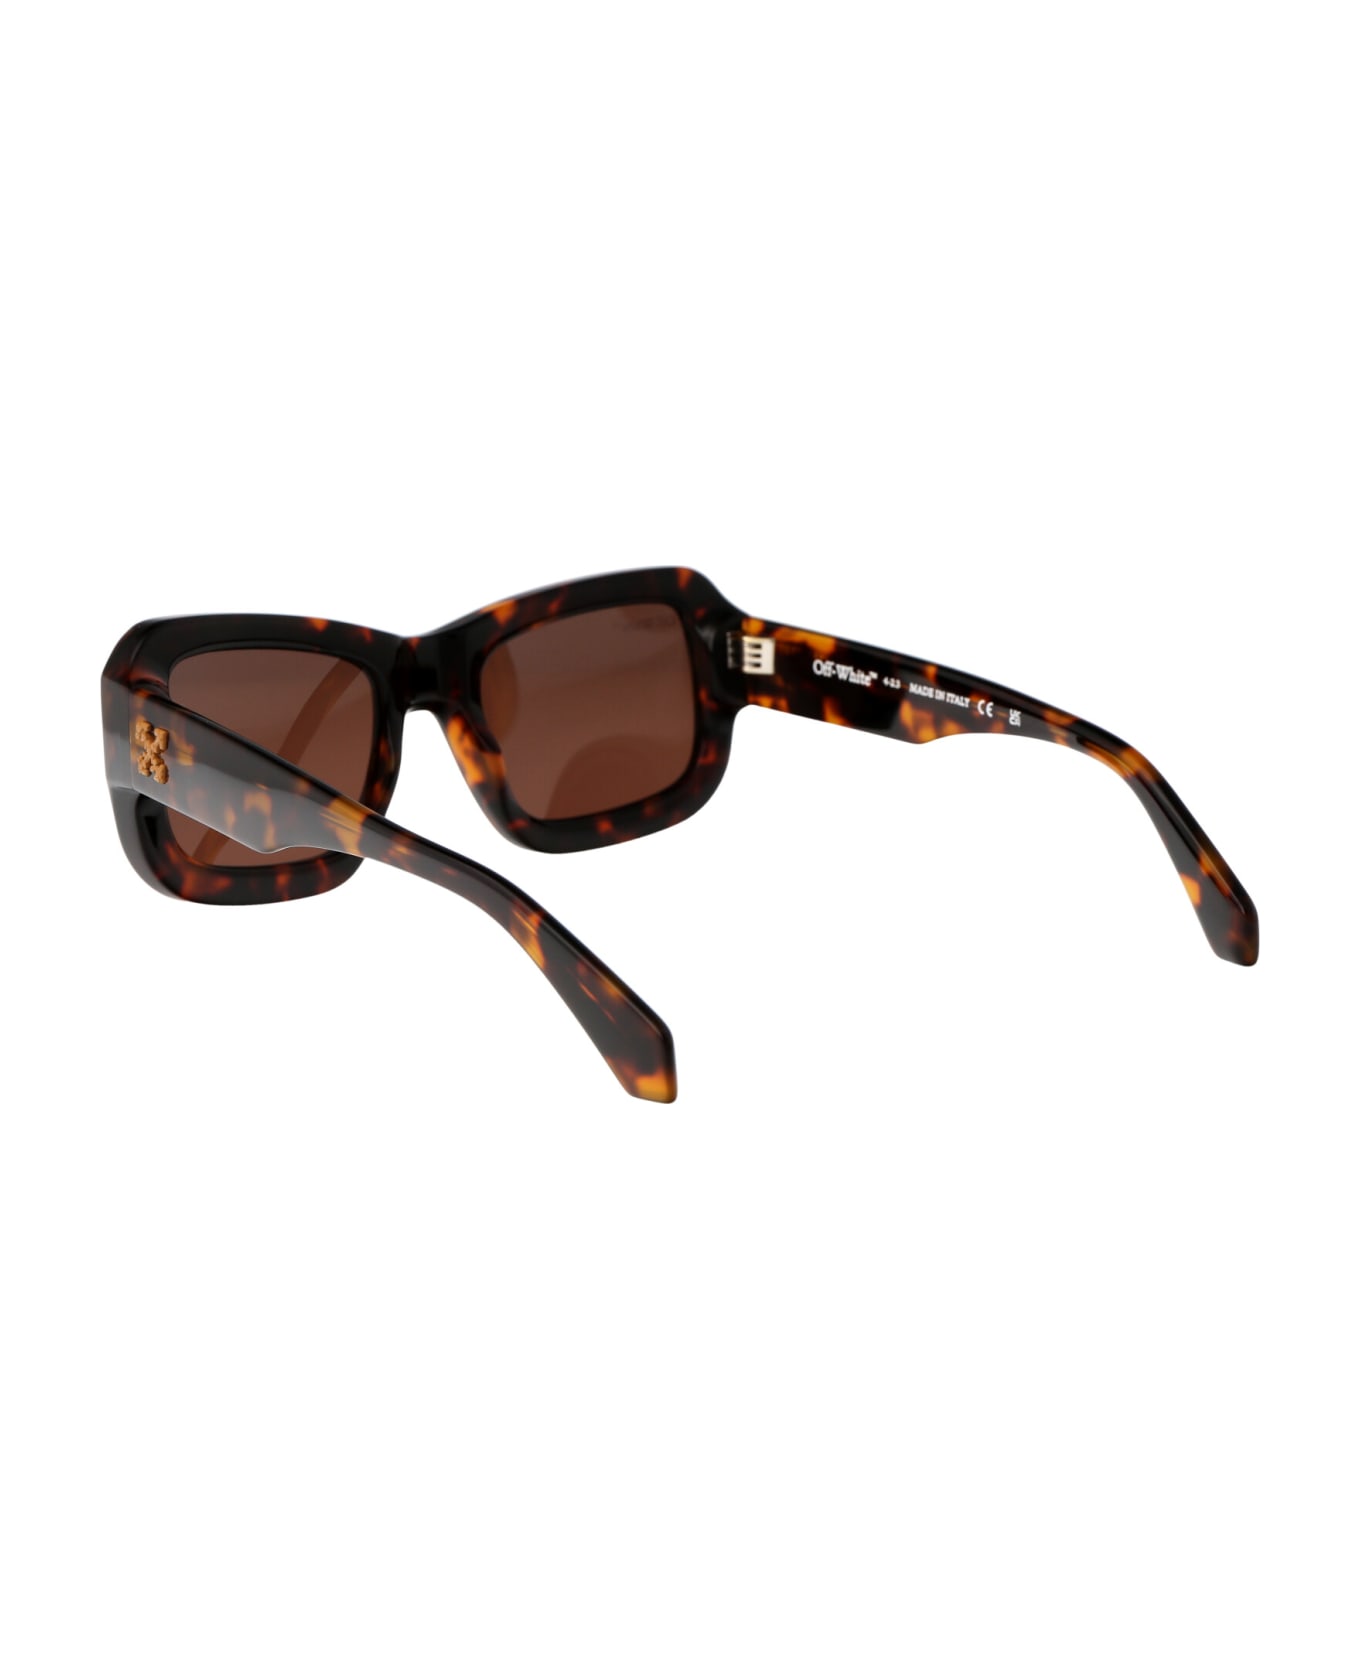 Off-White Verona Sunglasses - 6064 HAVANA